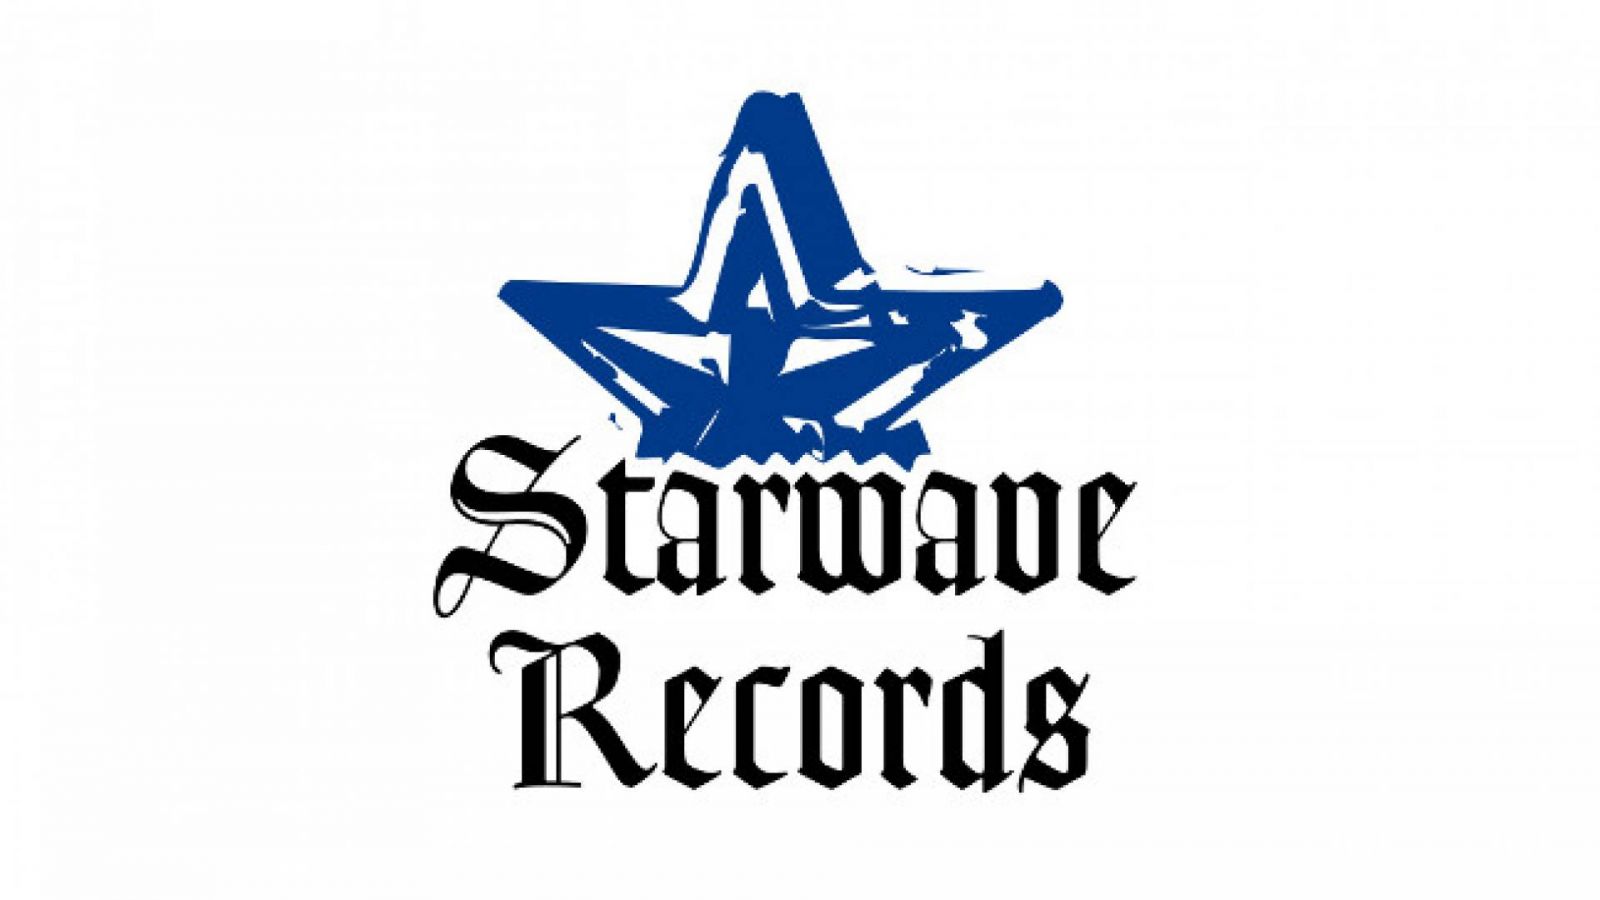 DVD от Starwave Records © Starwave Records